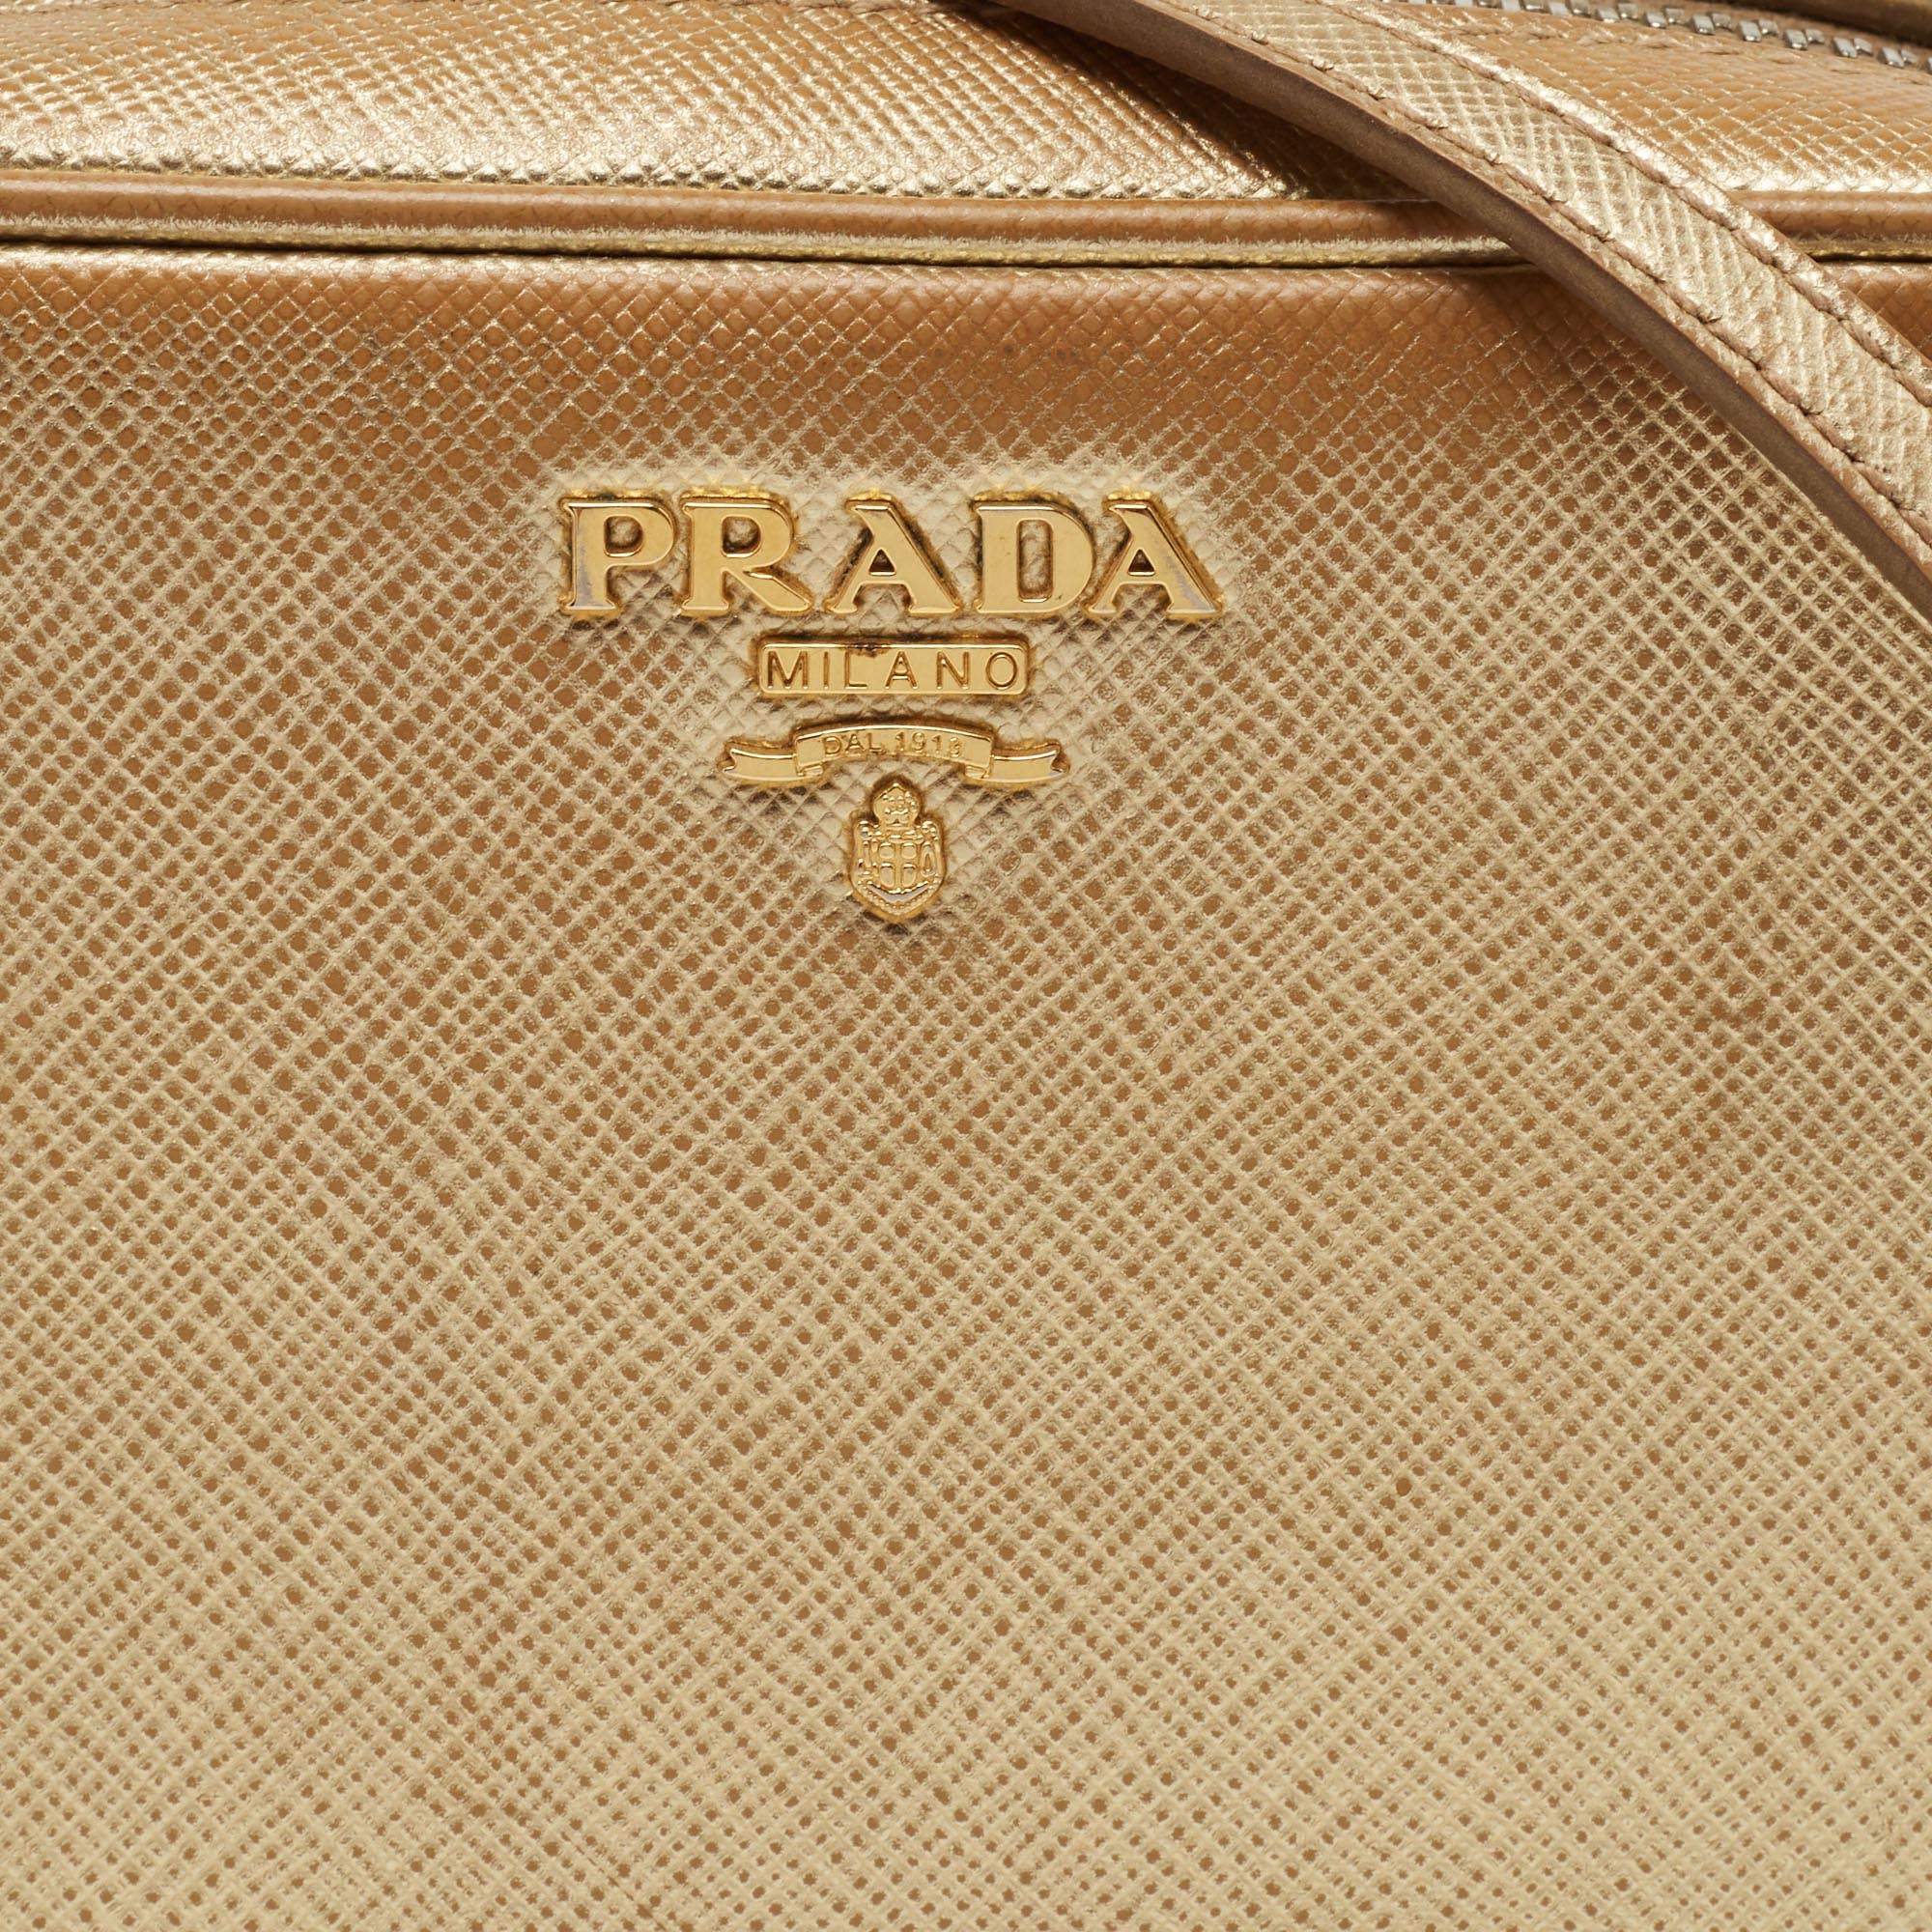 PRADA Bandoliera Bruyere pink saffiano leather gold logo crossbody